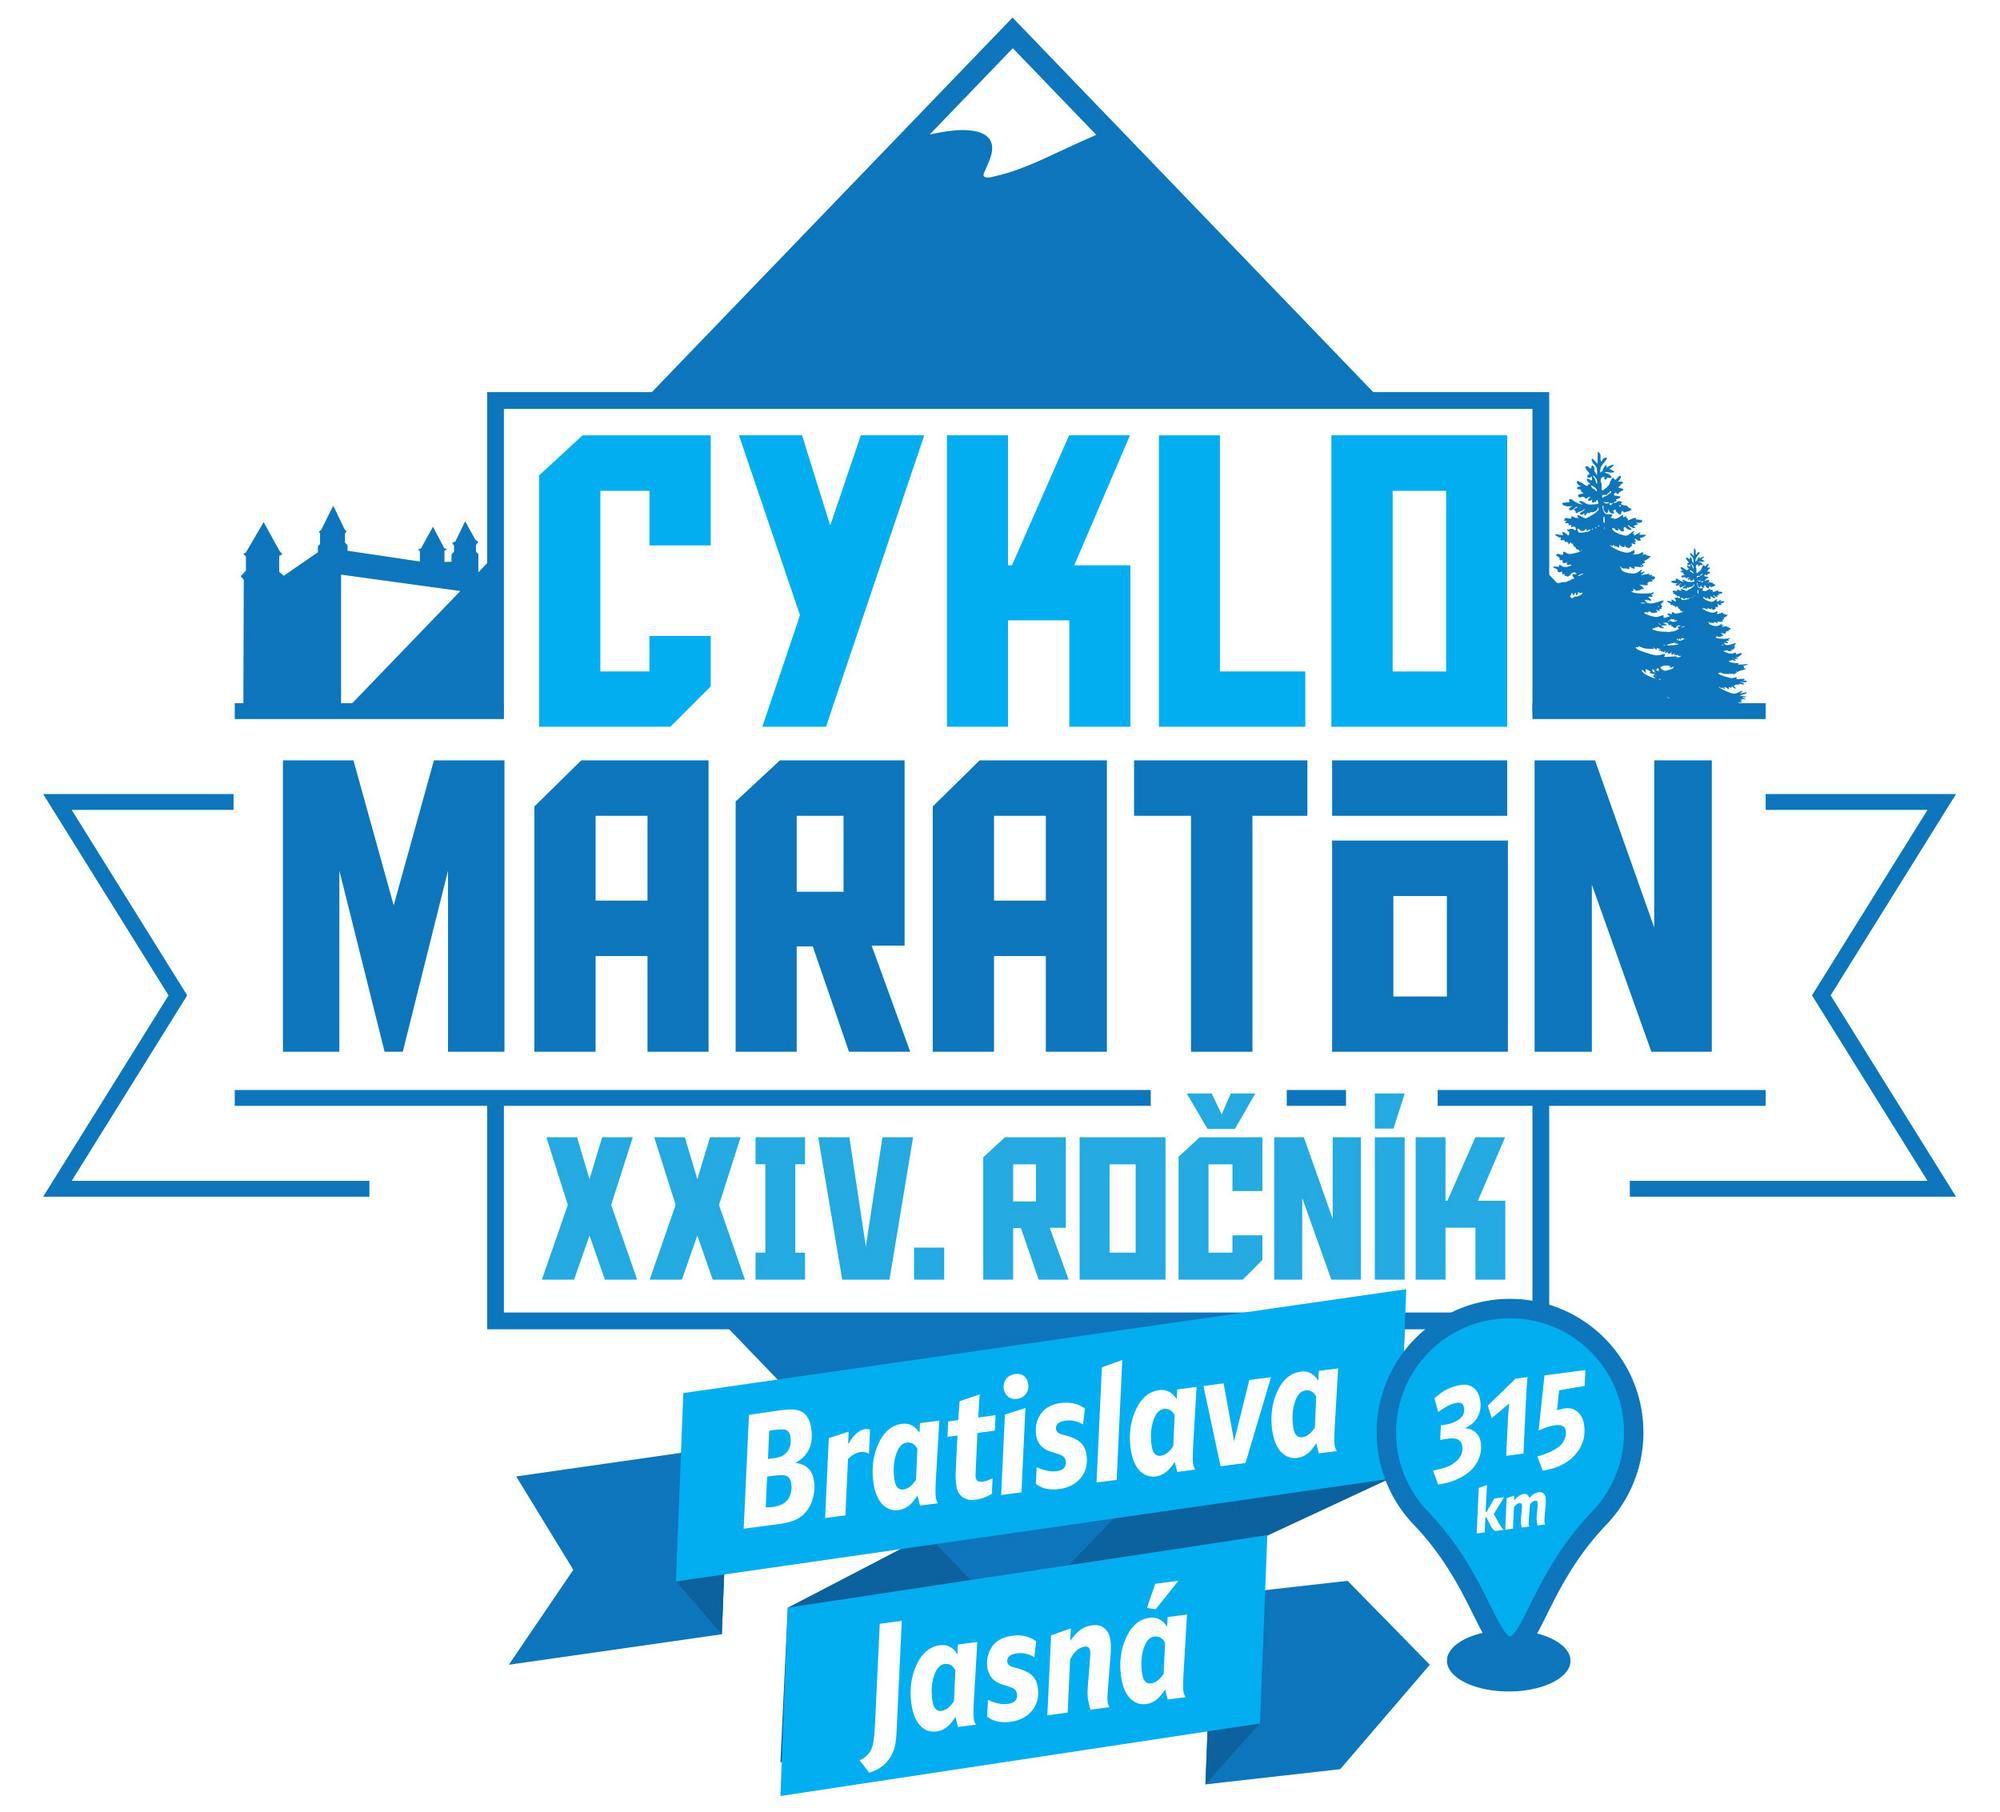 CykloMaraton, Bratislava - Jasna, 315 km, logo